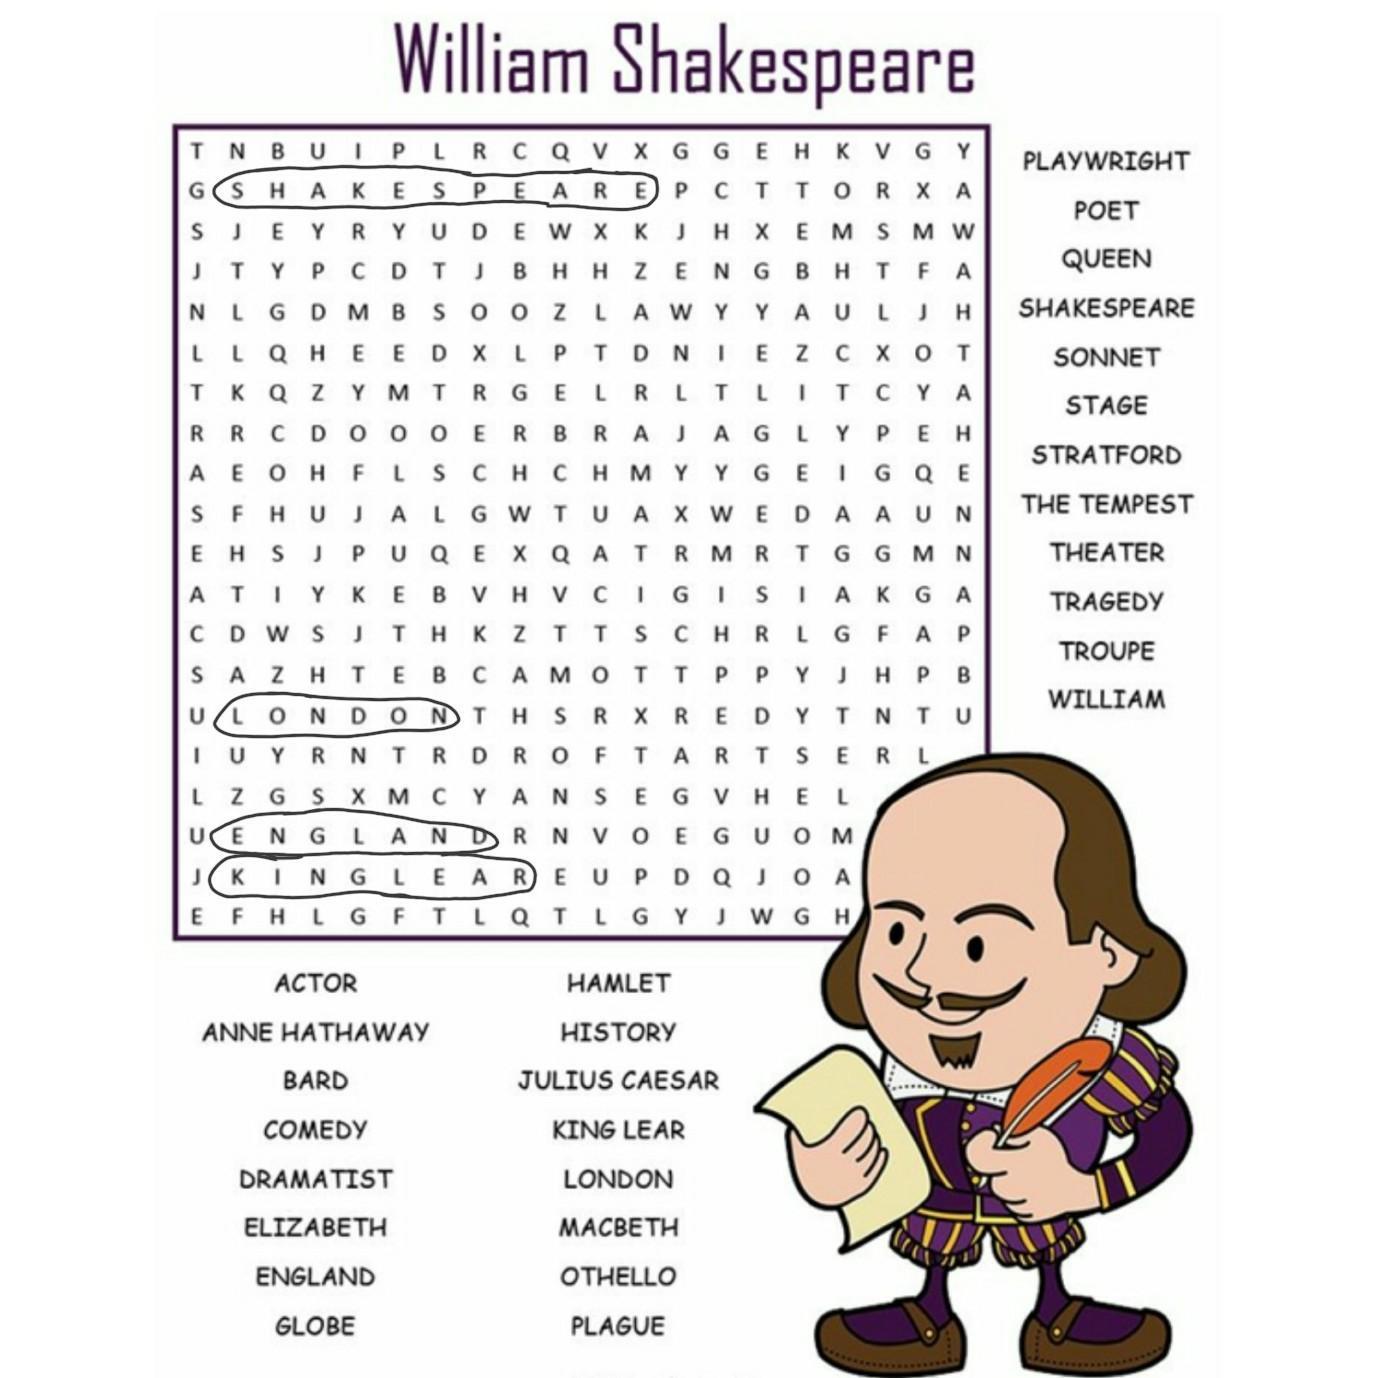 Work crossword. Шекспир задания на английском. Упражнения по теме Shakespeare. Задания по теме театр на английском языке. Wordsearch с заданием.